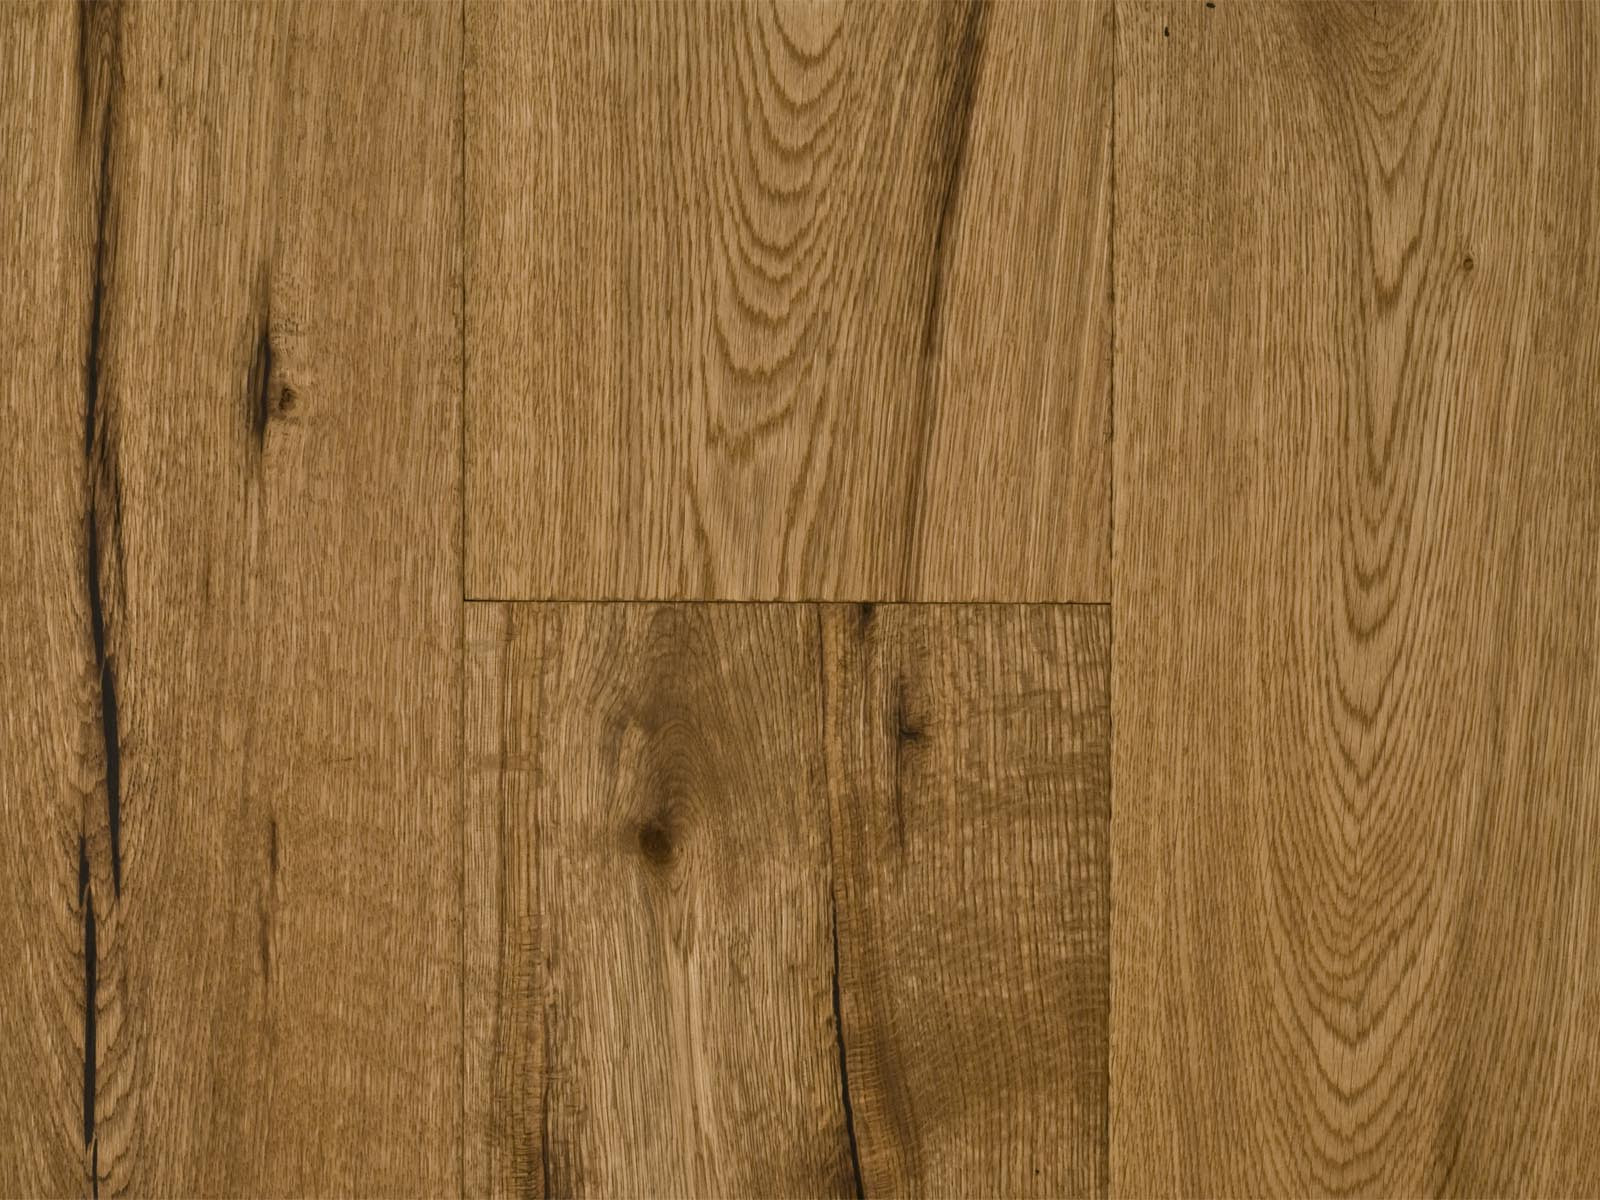 vintage hardwood flooring prices of duchateau hardwood flooring houston tx discount engineered wood inside hardwood floors a· antique white european oak